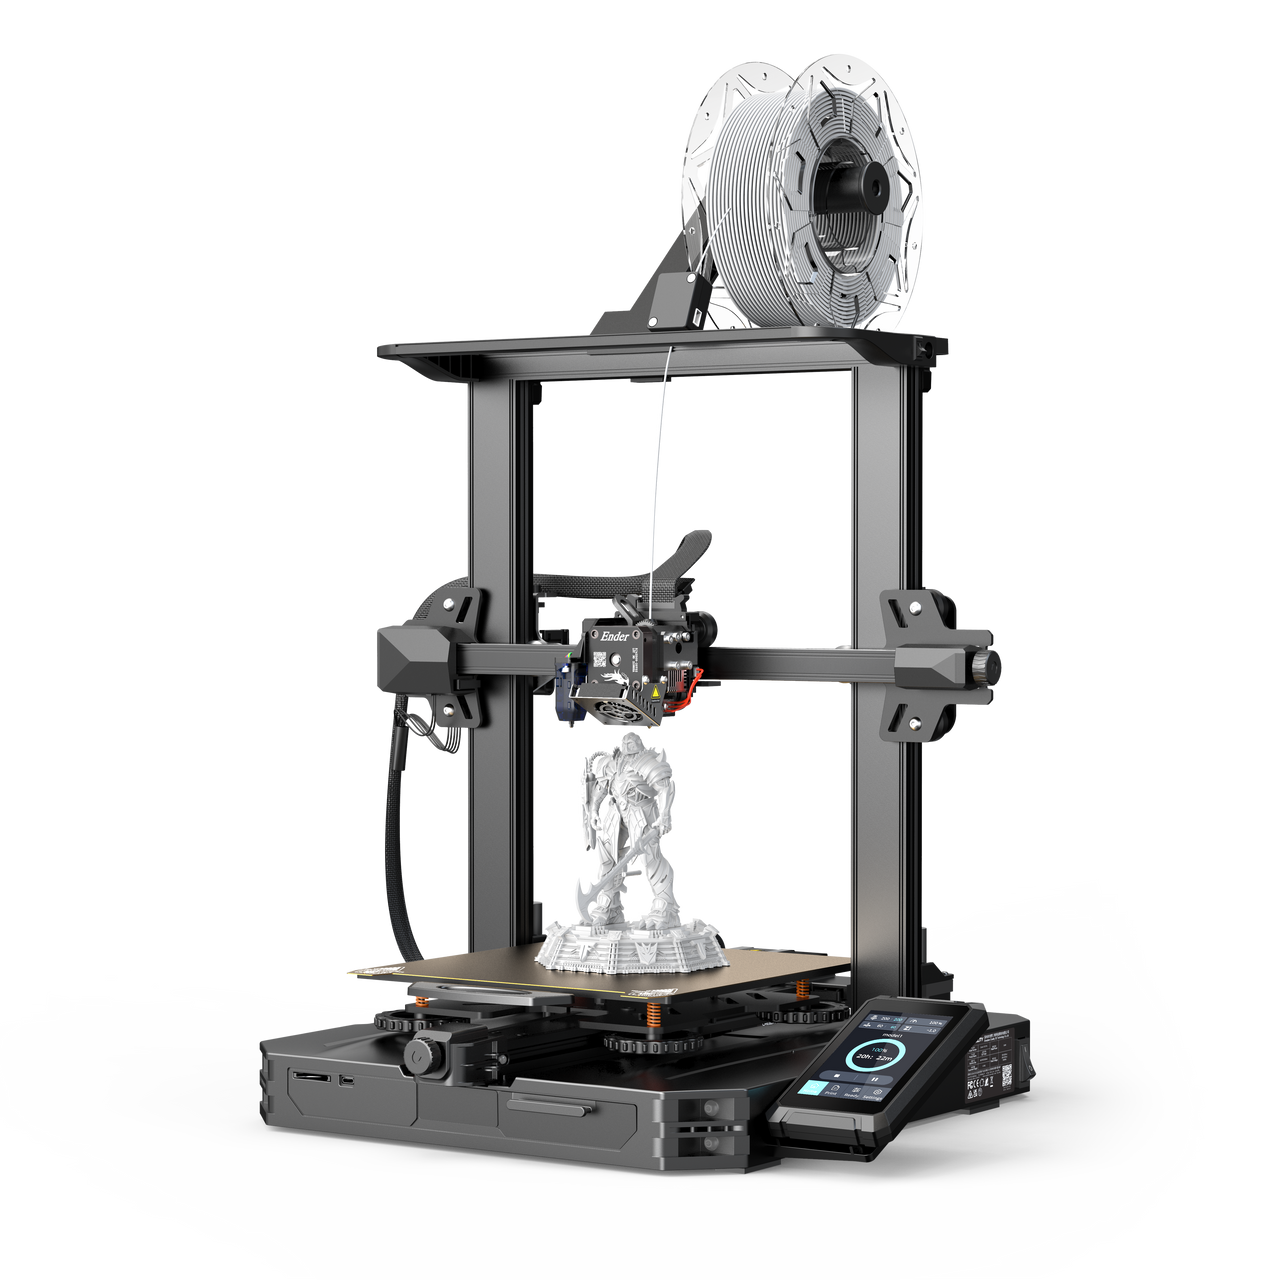 Ender 3 S1 Pro 3D Printer.